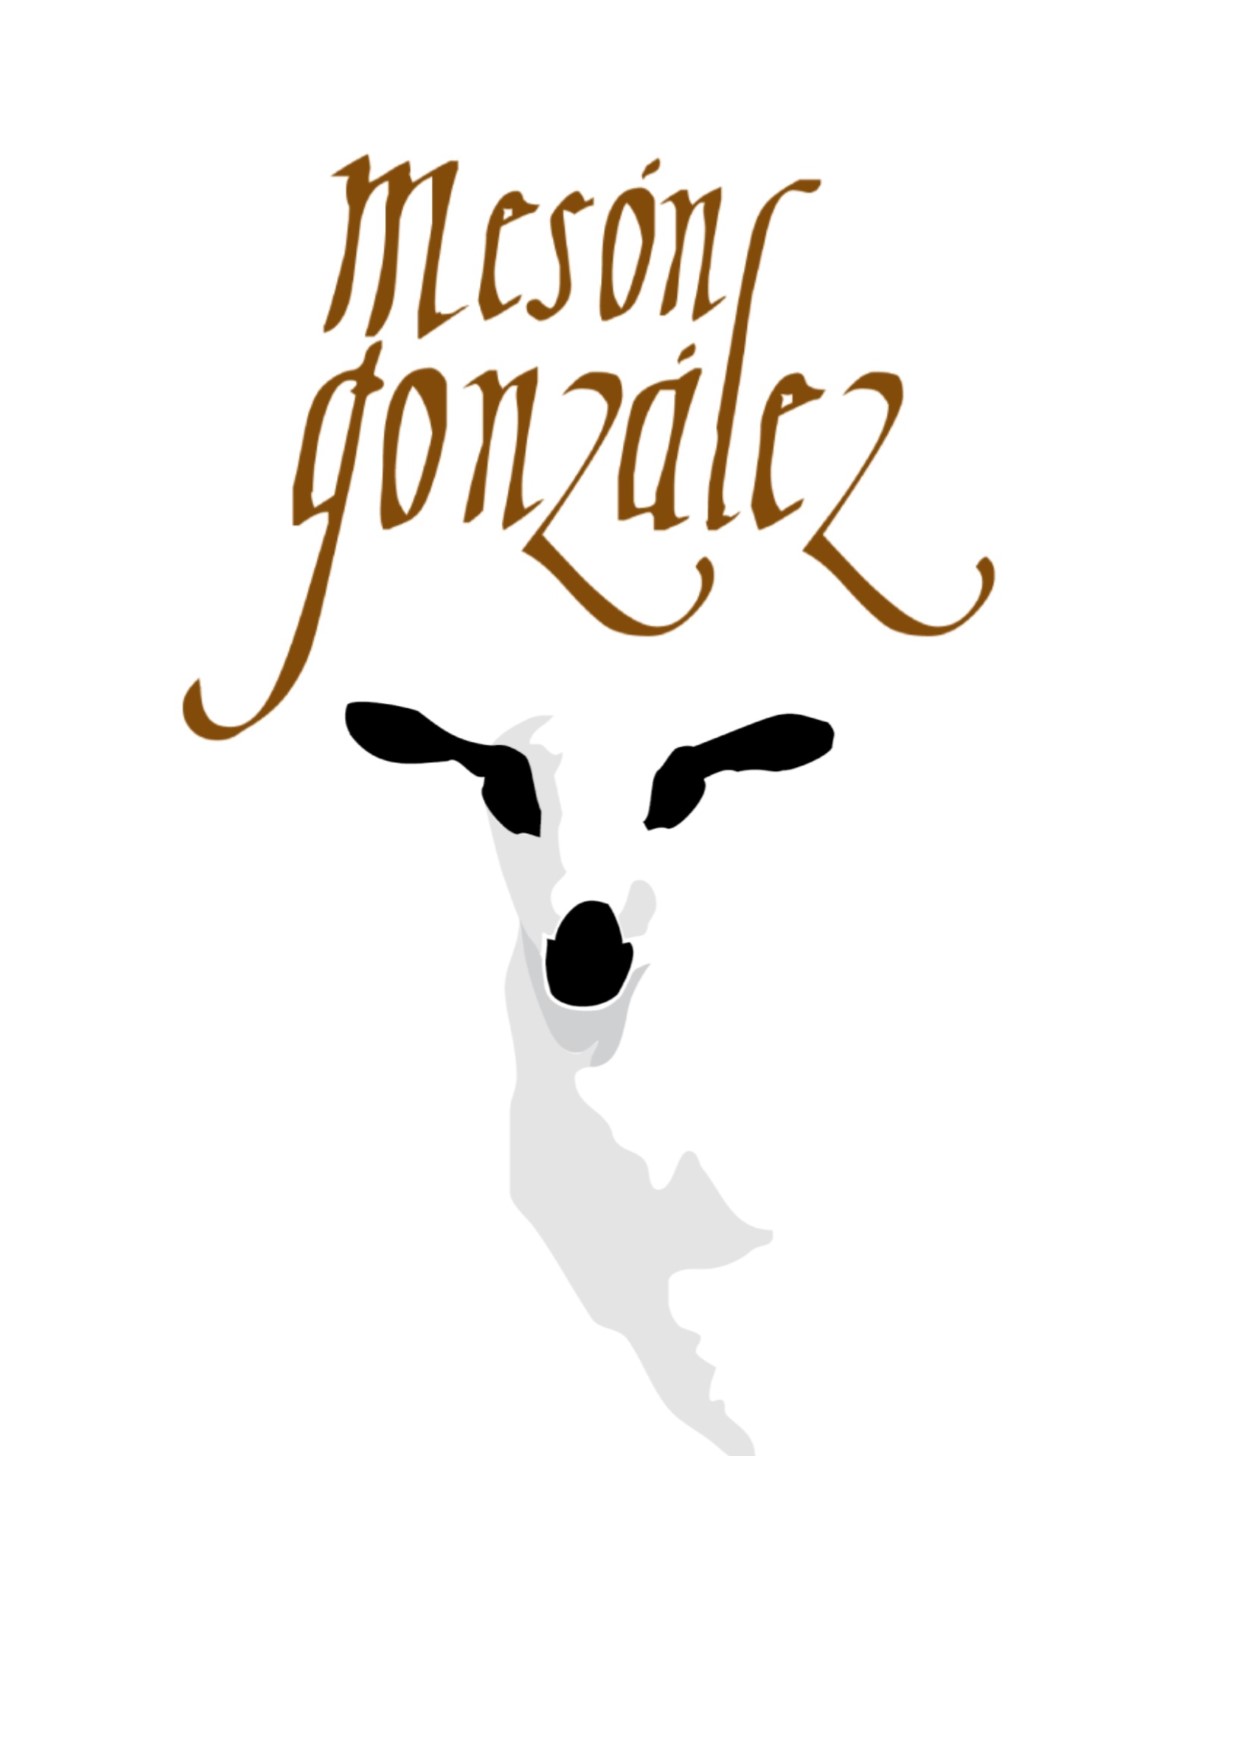 Meson Gonzalez